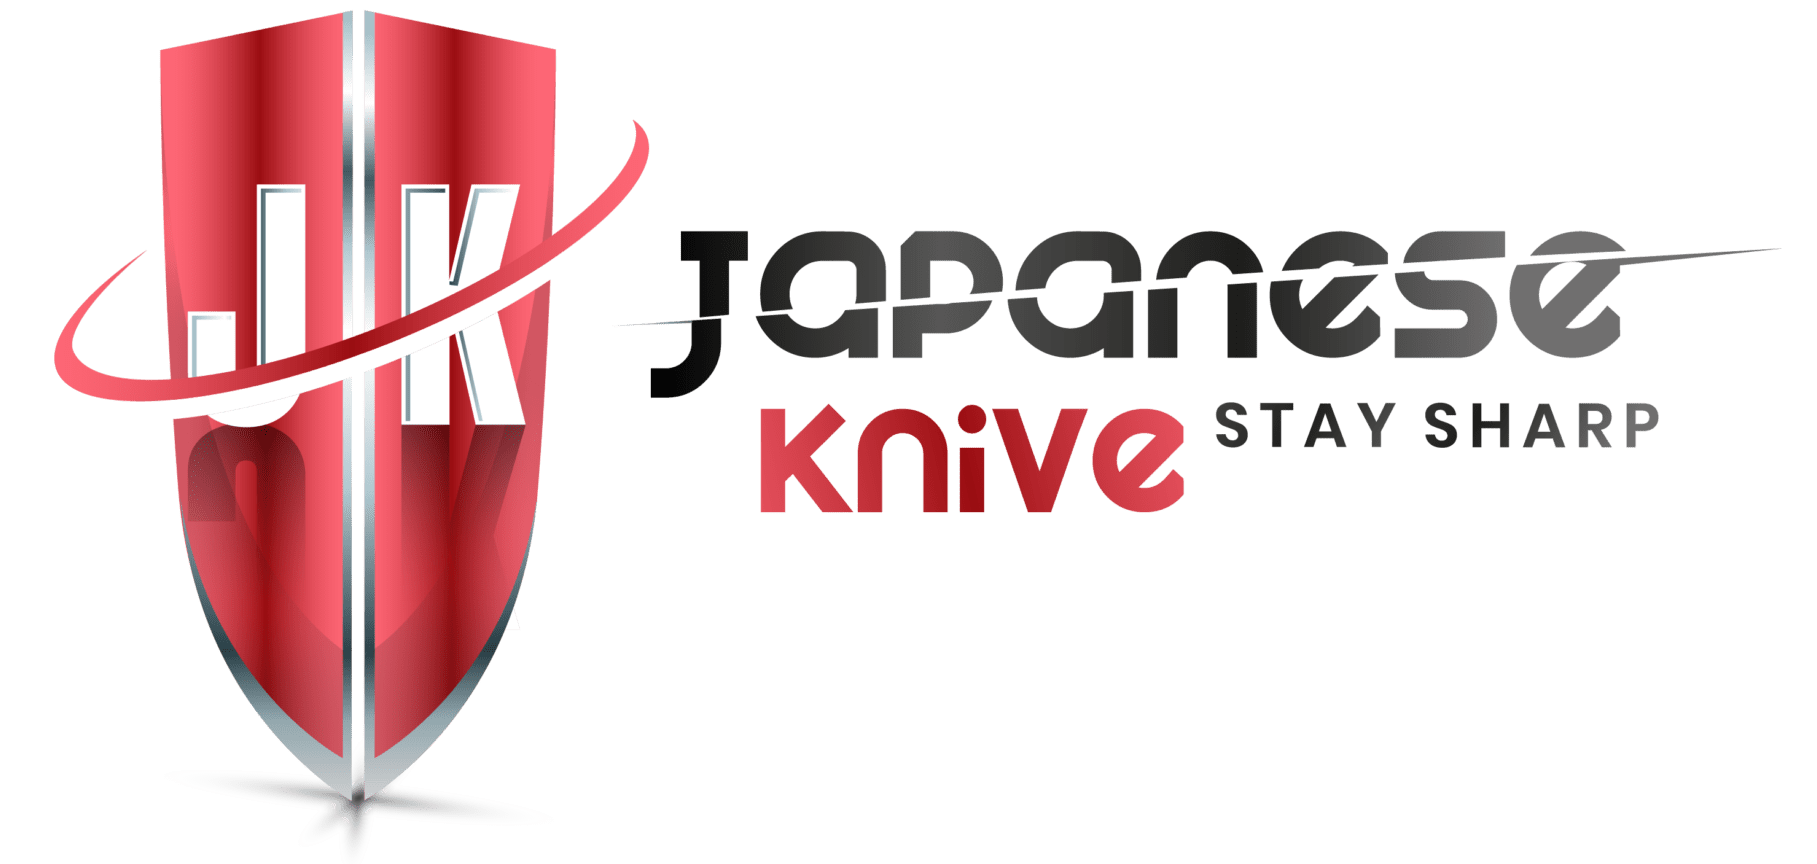 Japanese knives